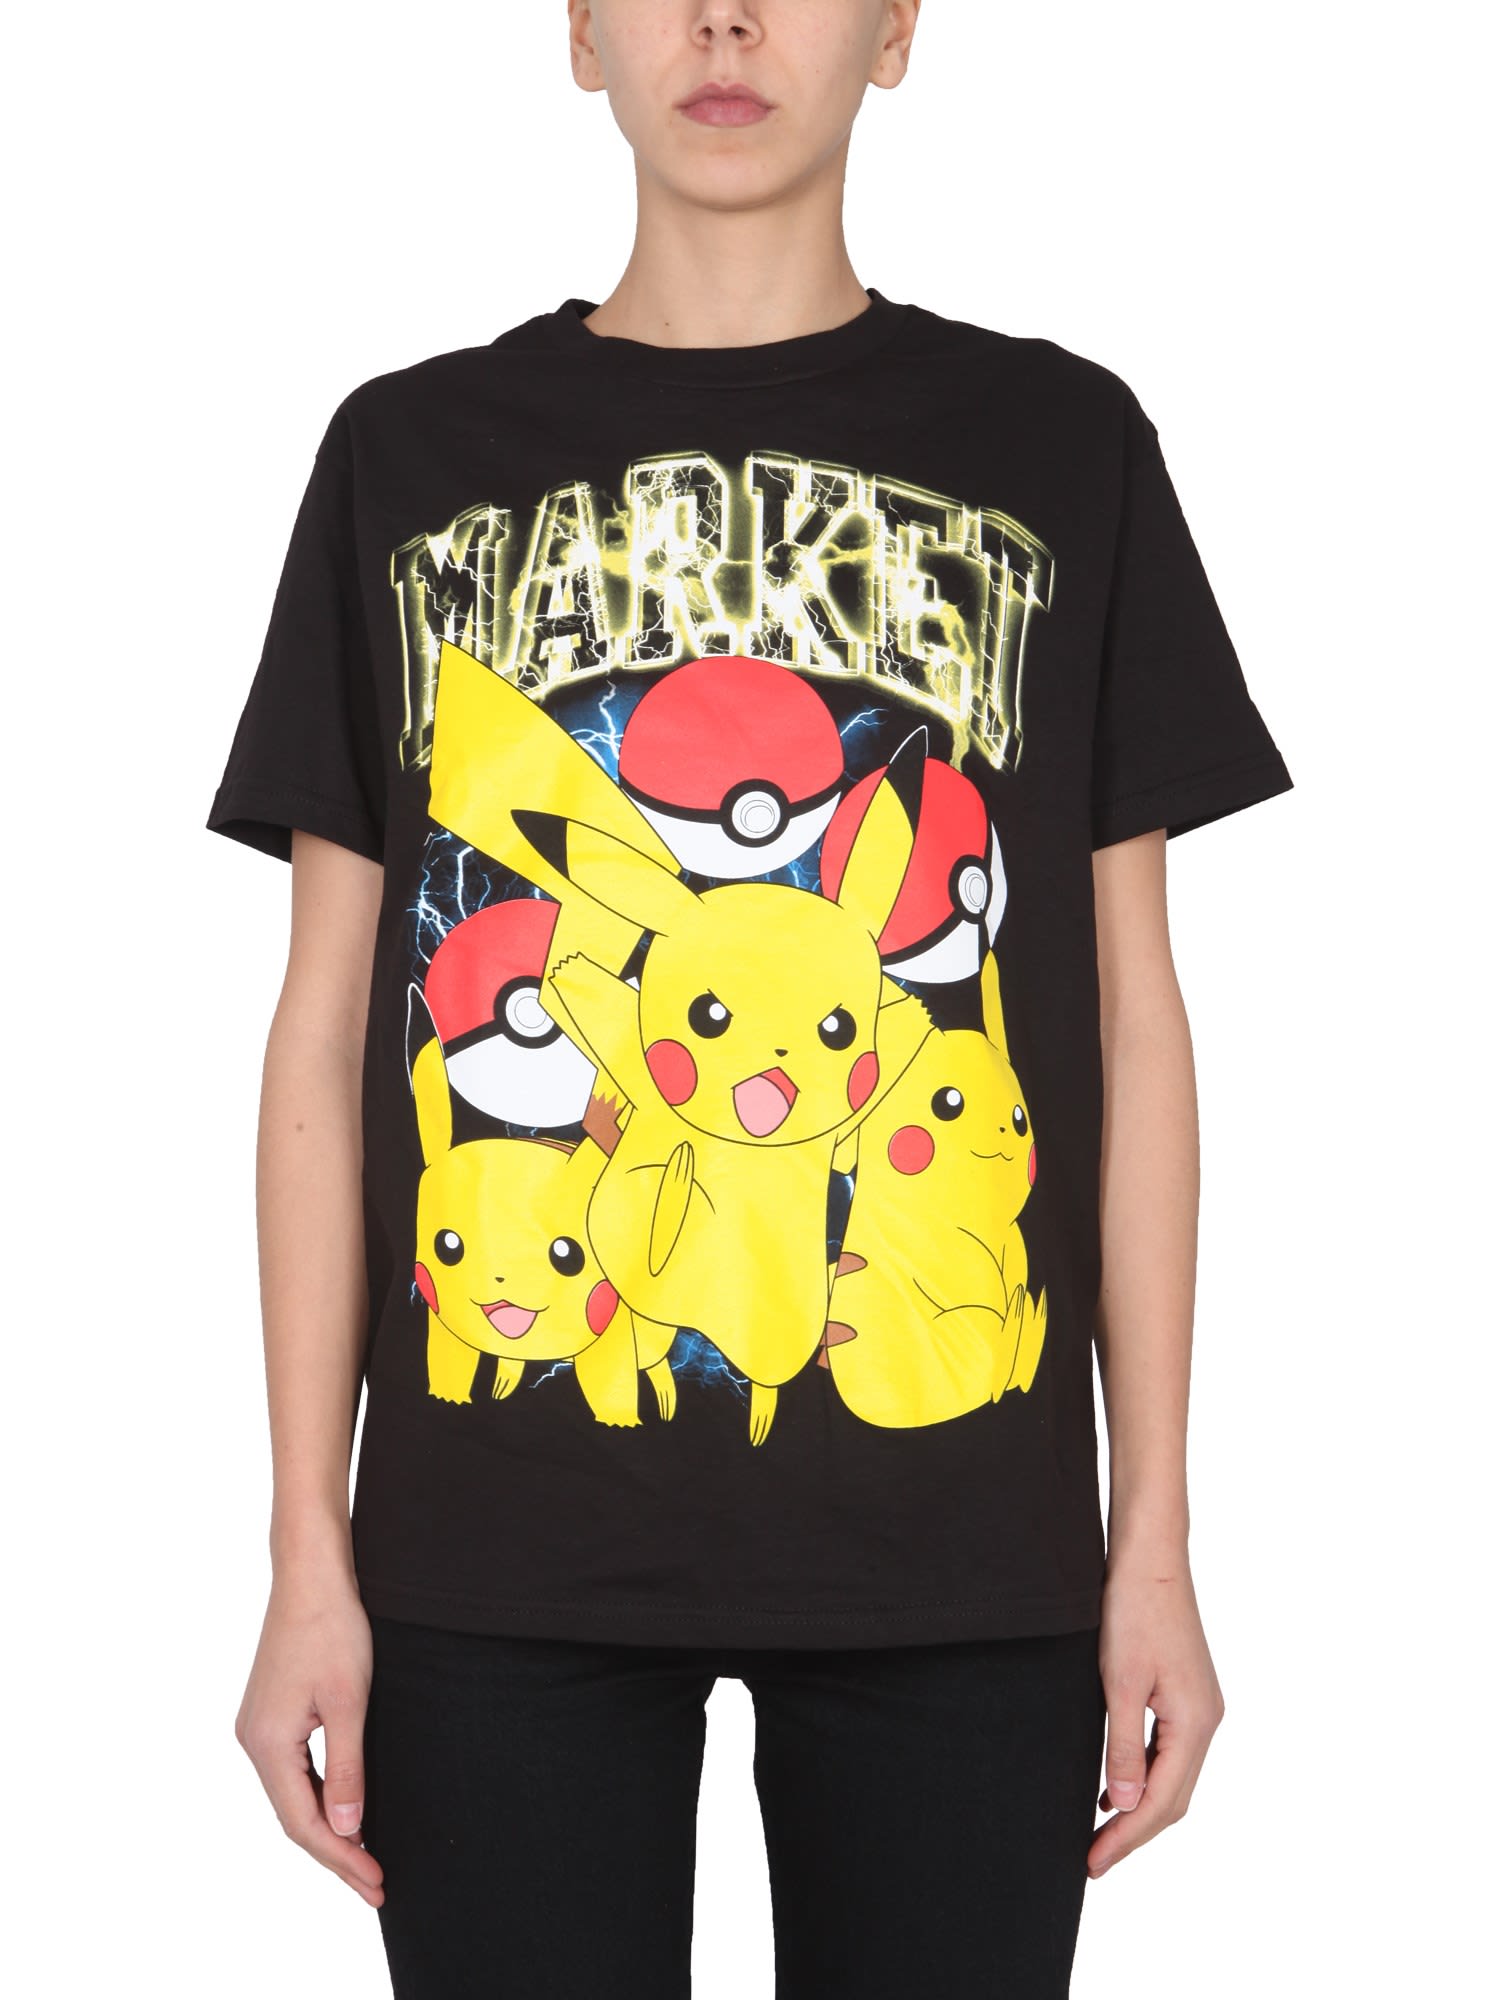 Market Pokemon Pikachu T-shirt